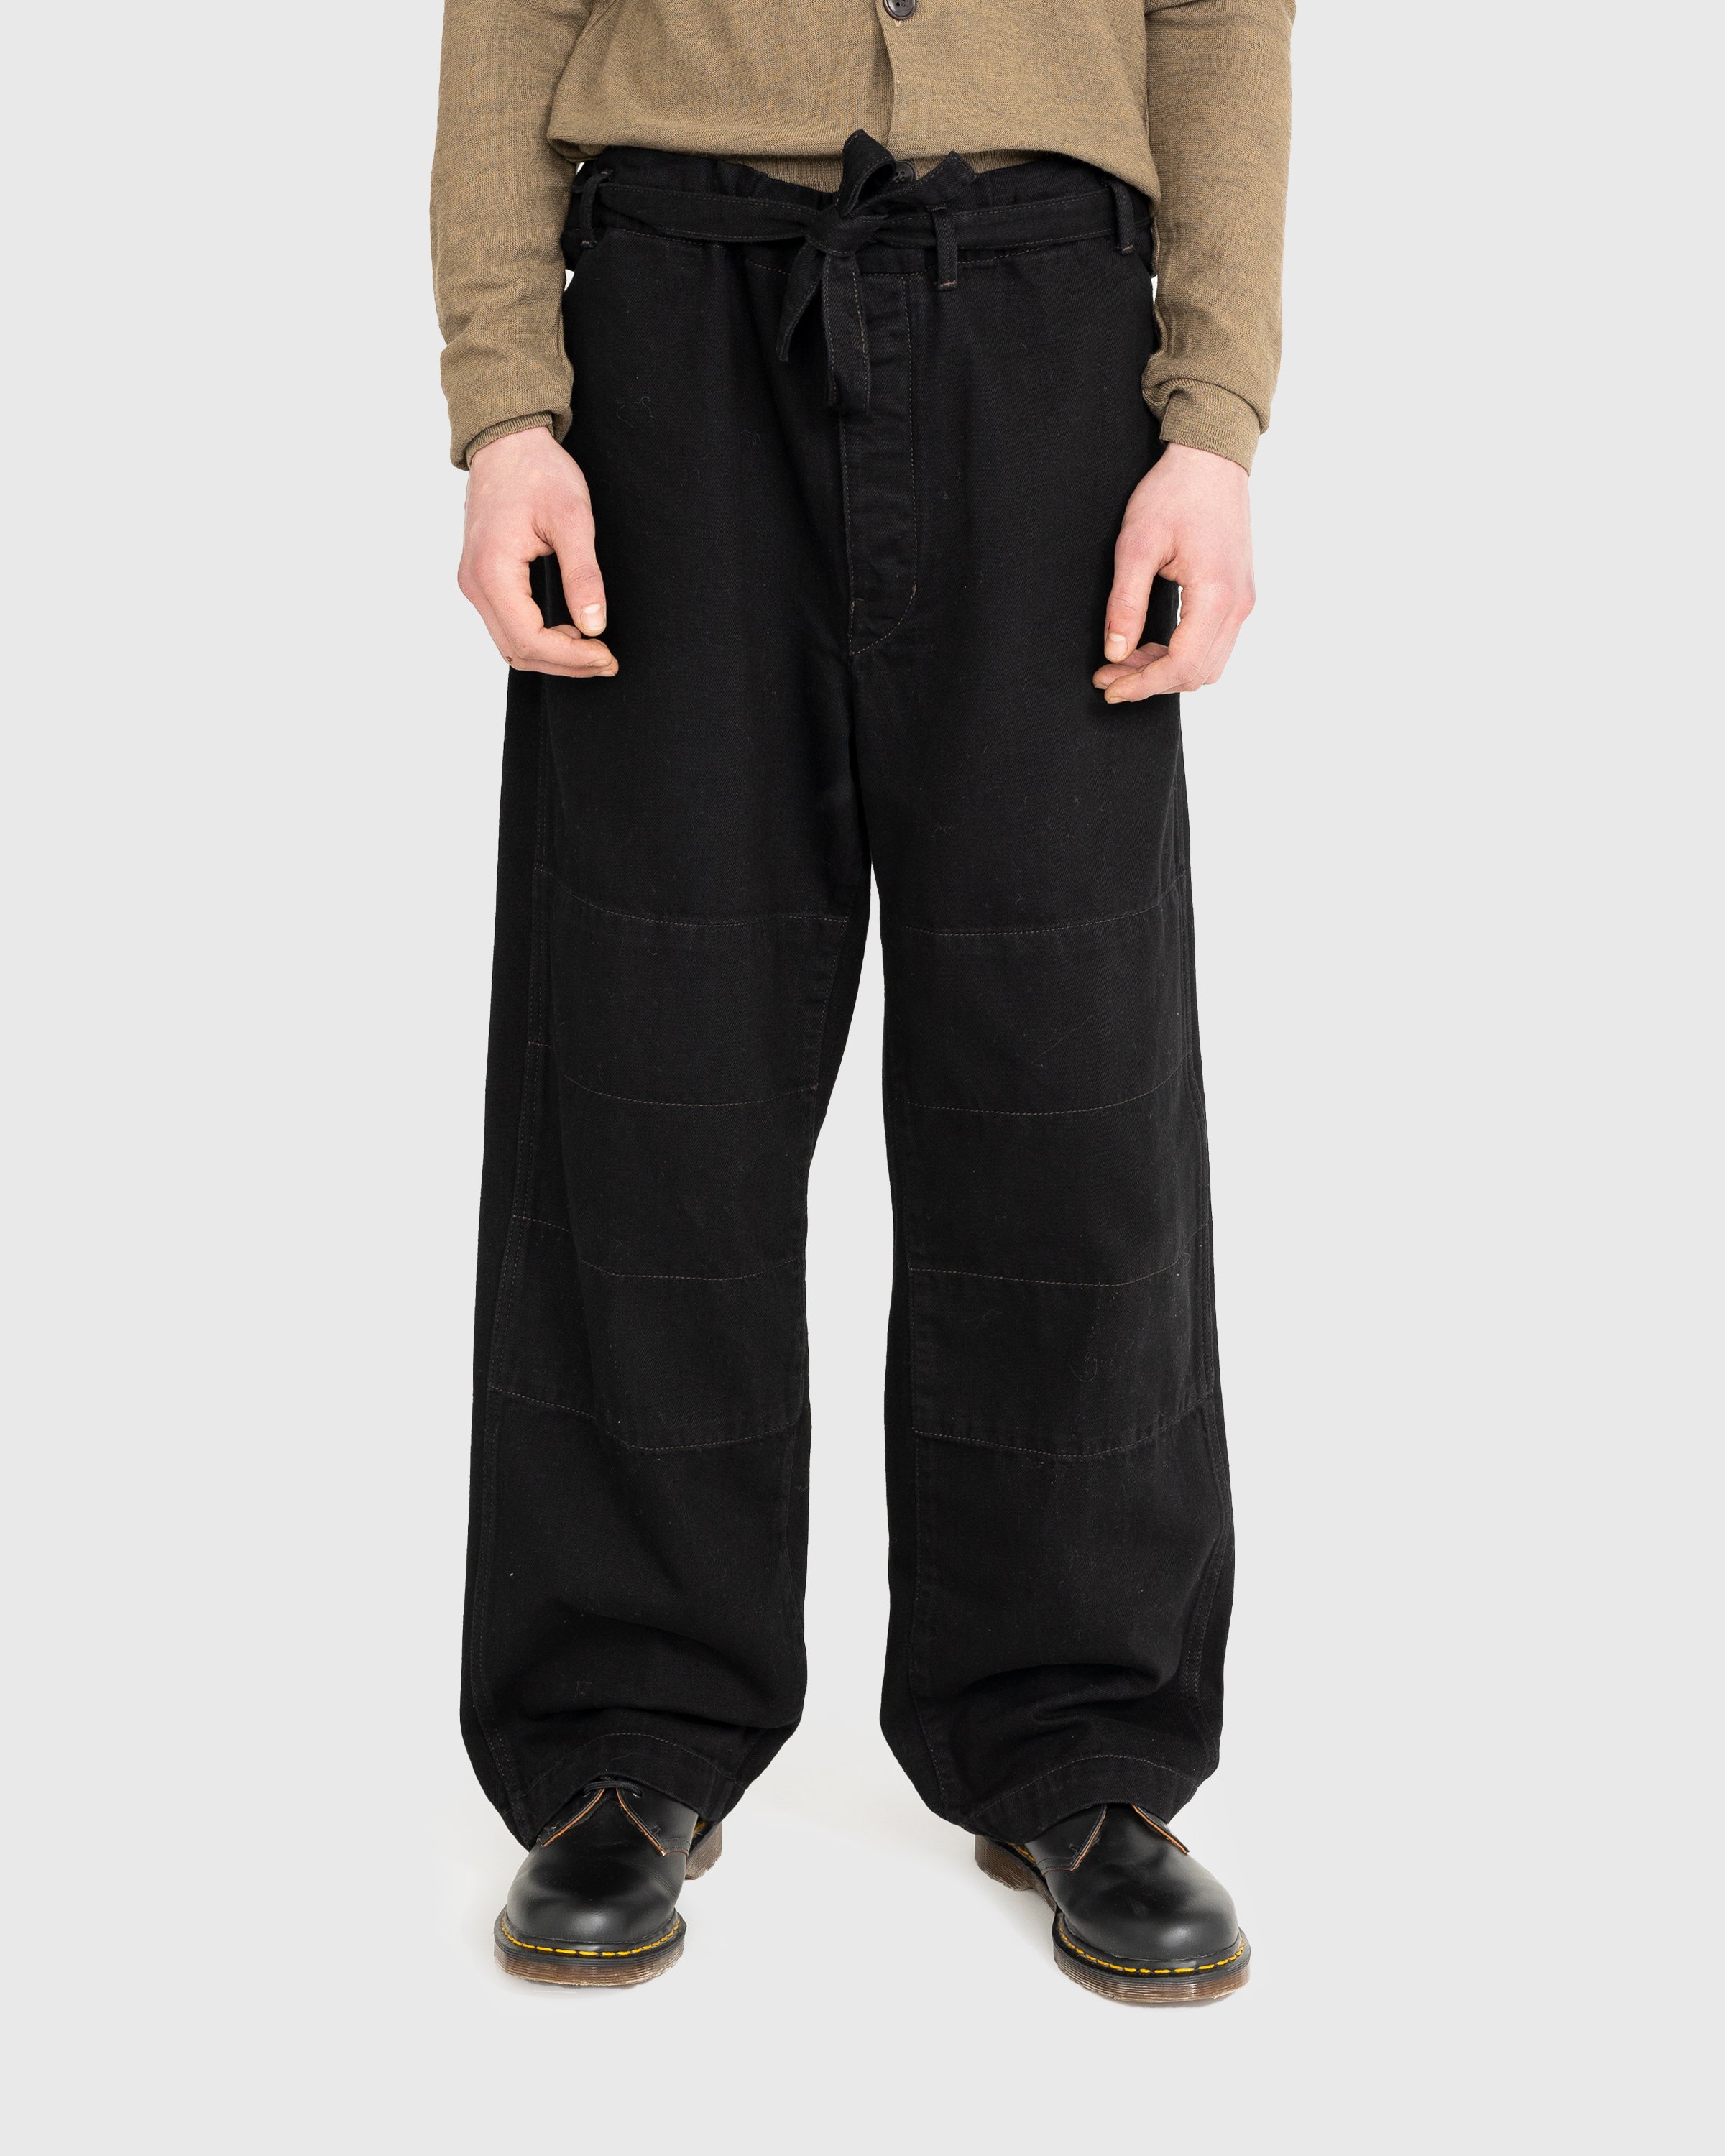 Lemaire - Judo Pants - Clothing - Black - Image 2